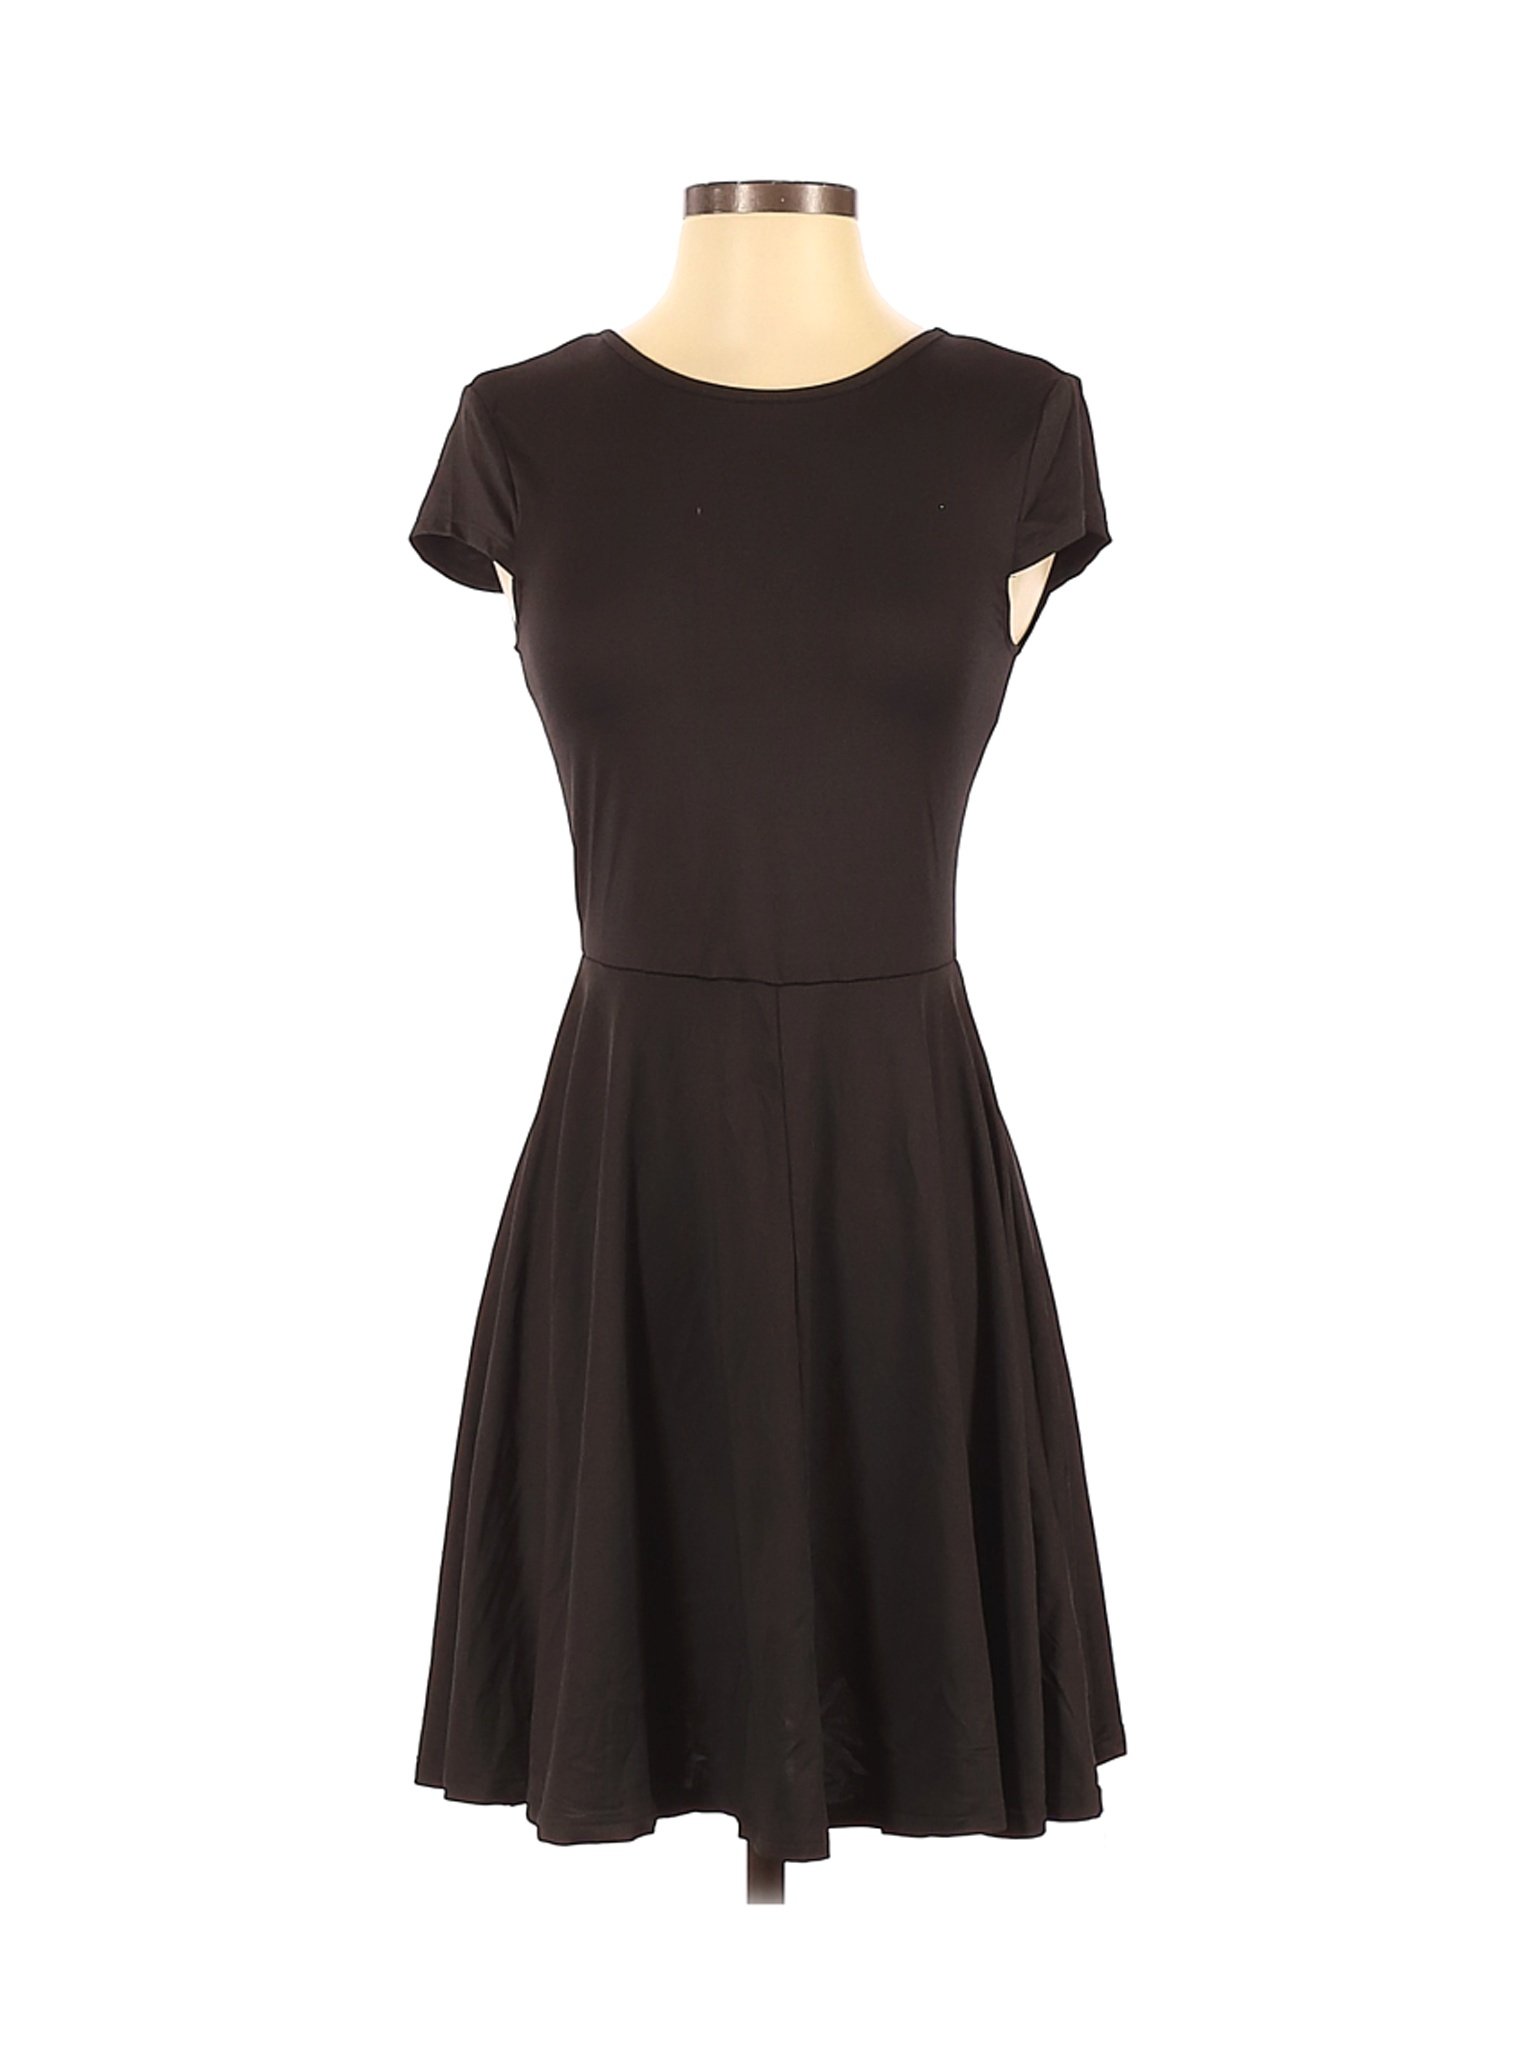 Shein Women Brown Casual Dress S | eBay